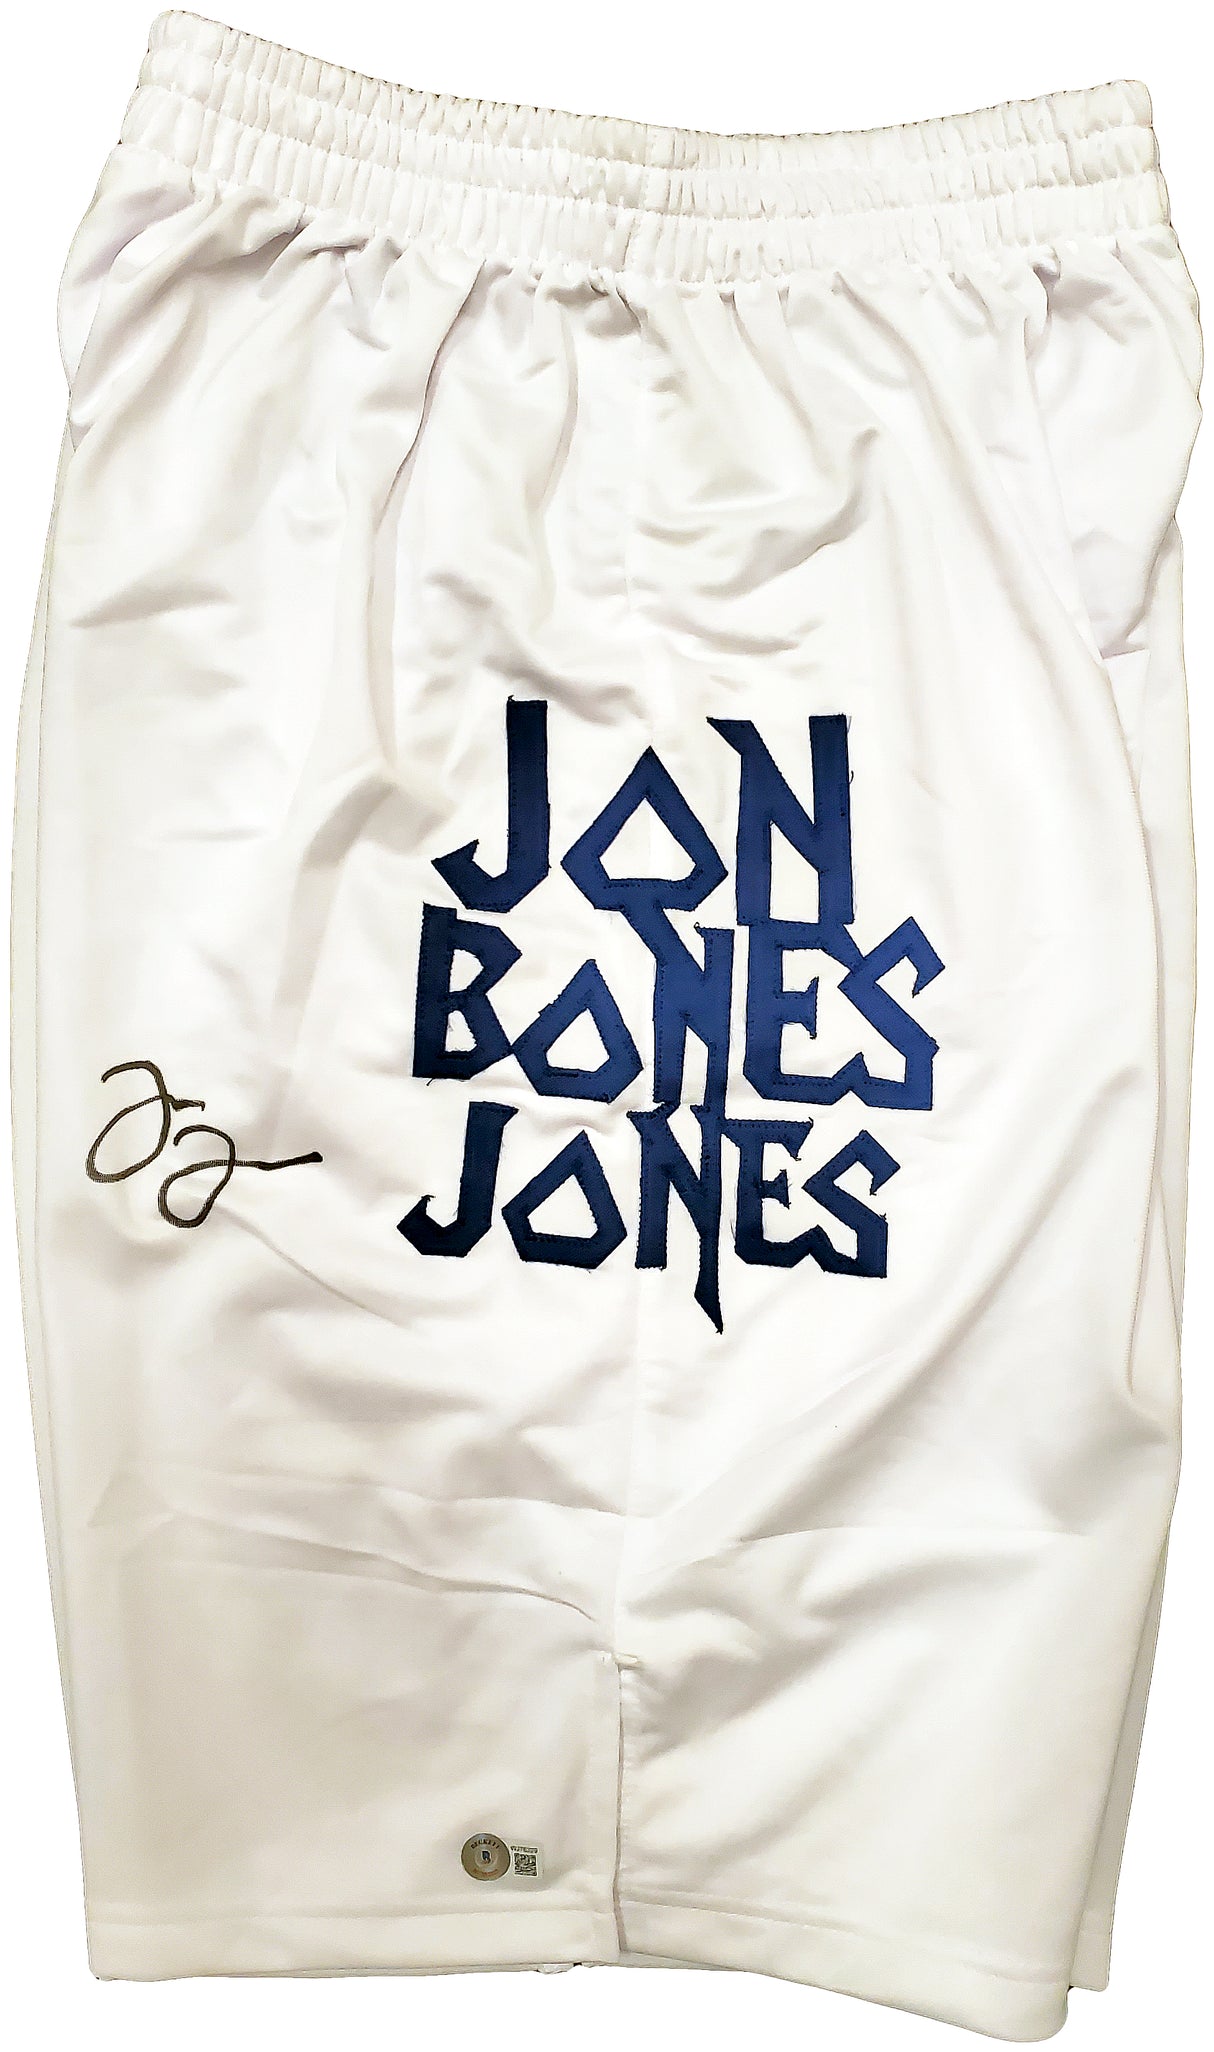 Jon Bones Jones Autographed White Boxing Trunks Beckett BAS QR Stock #200324